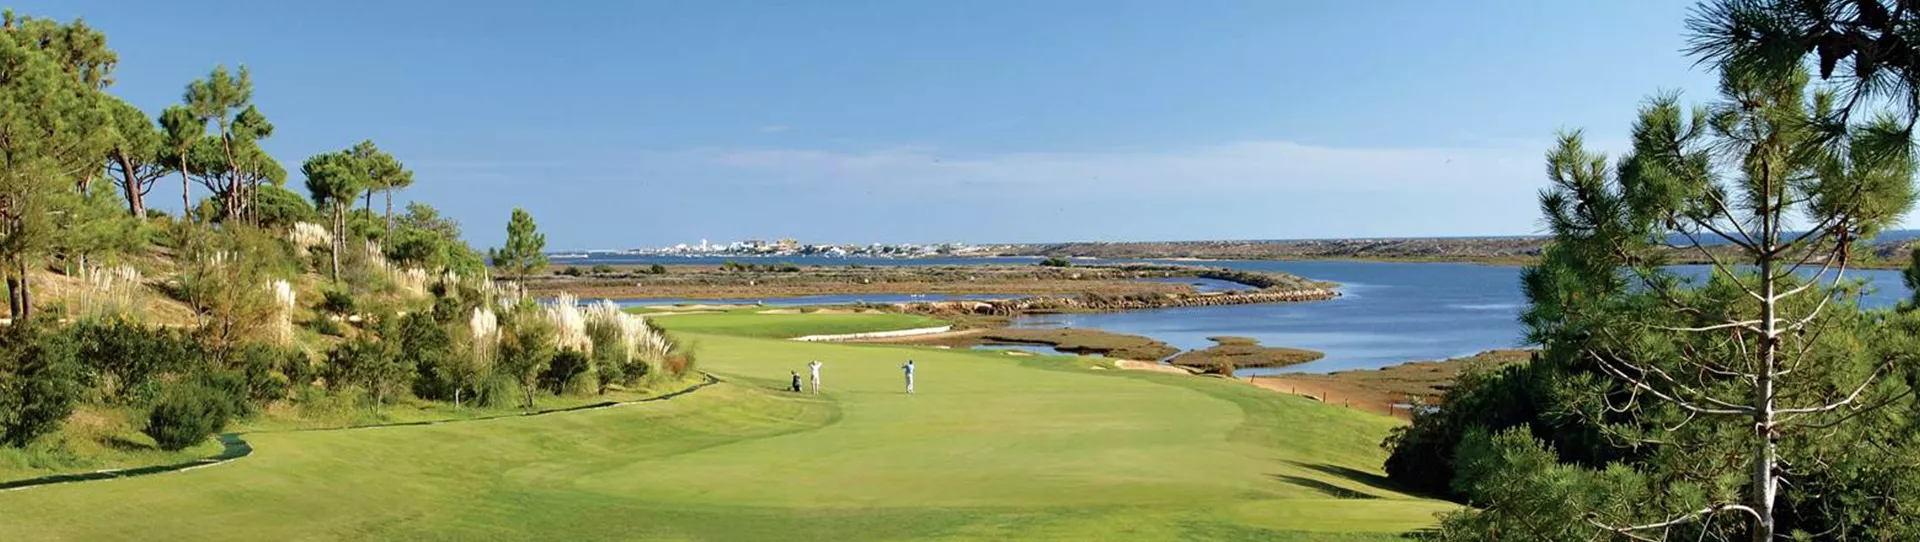 Portugal golf holidays - San Lorenzo 2 Rounds - Photo 1